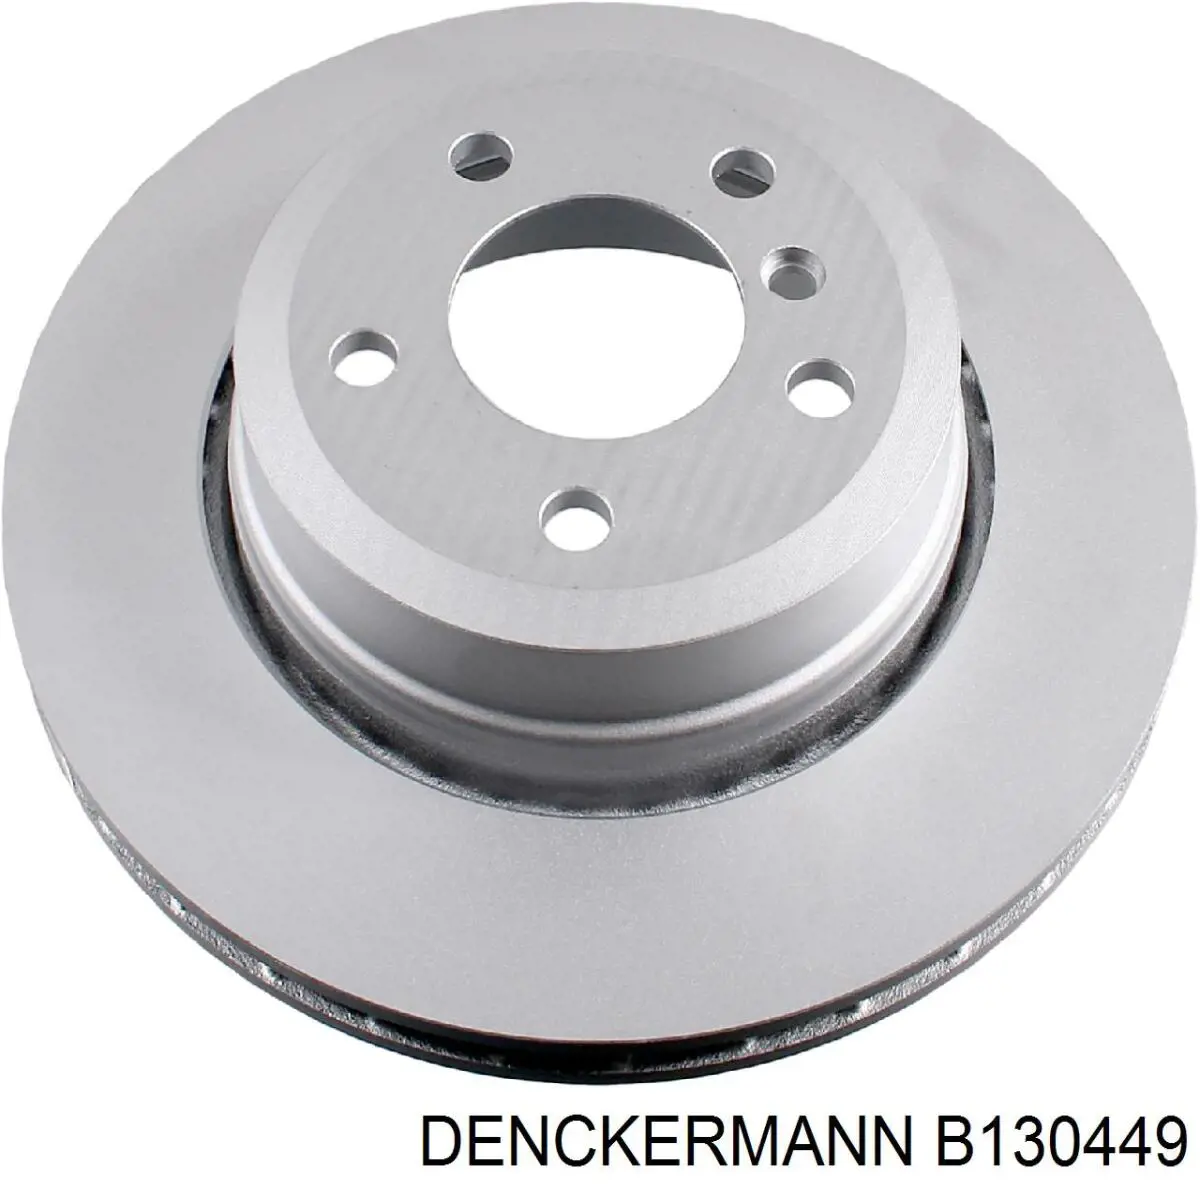 B130449 Denckermann диск тормозной задний